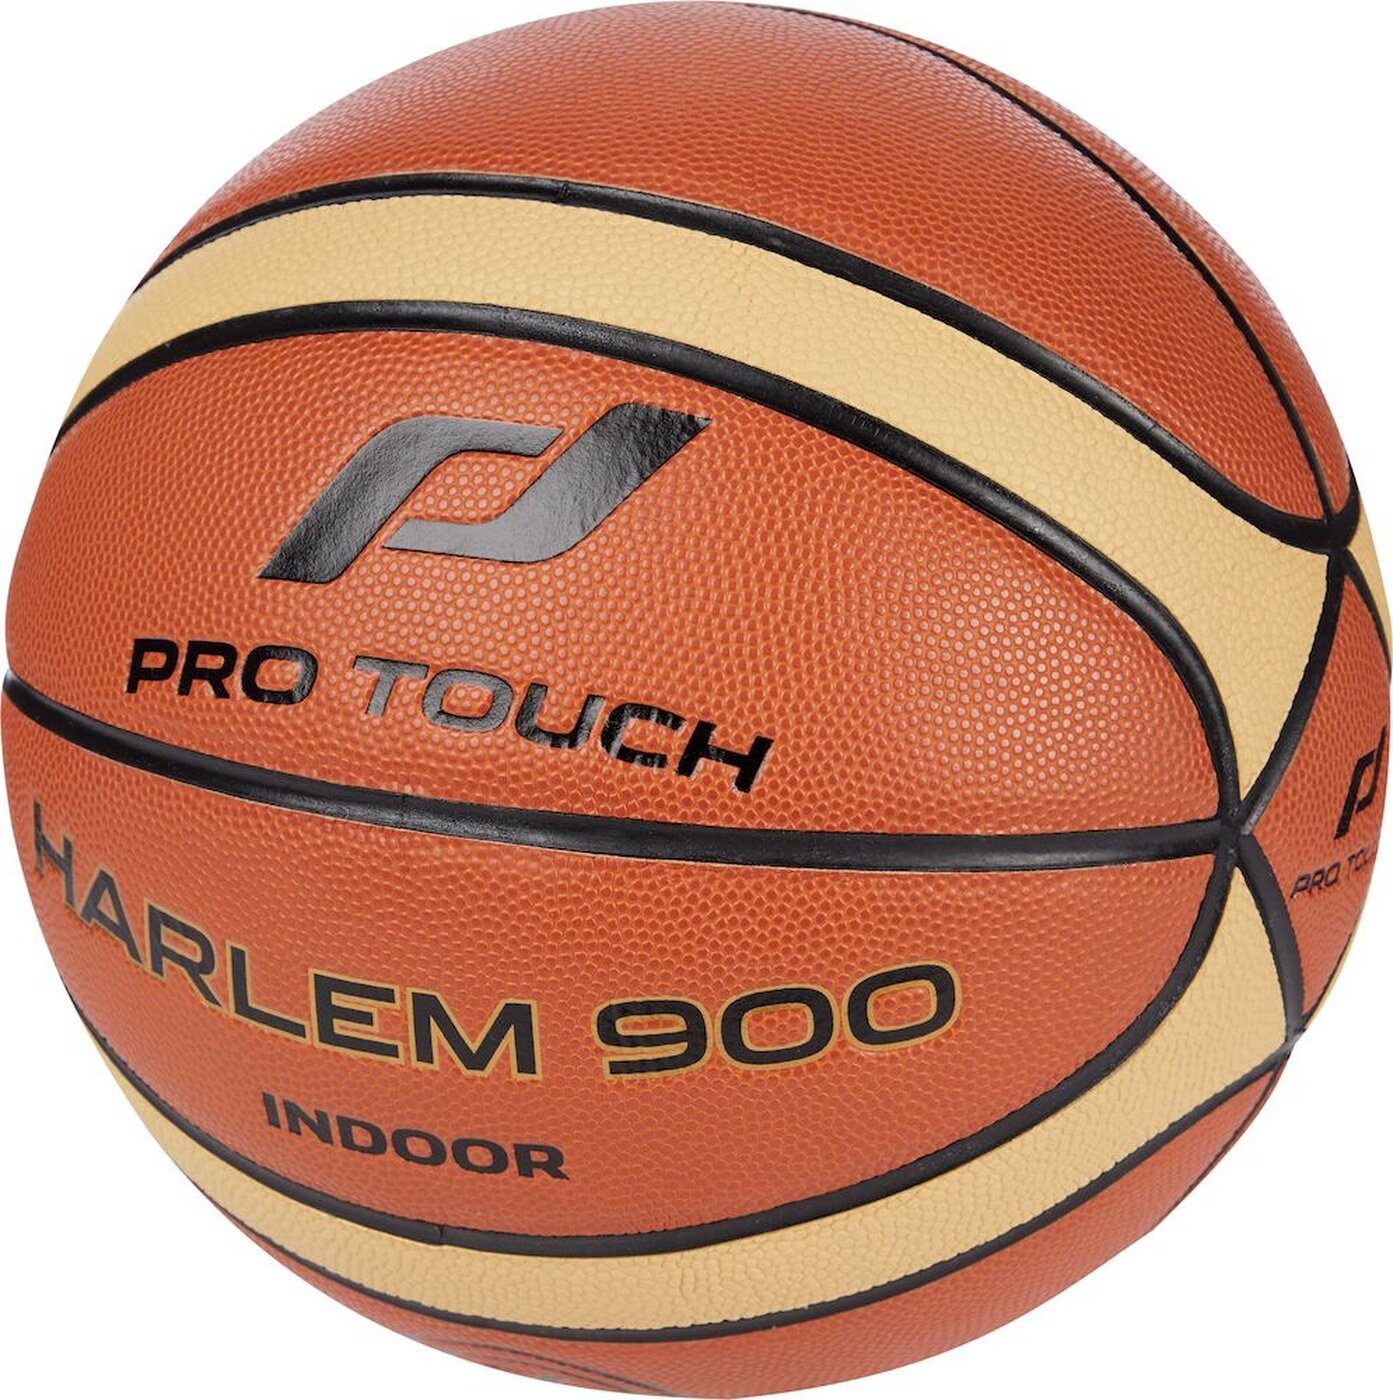 Pro Touch Basketball Basketball Harlem 900 BROWN/BEIGE/BLACK/GO